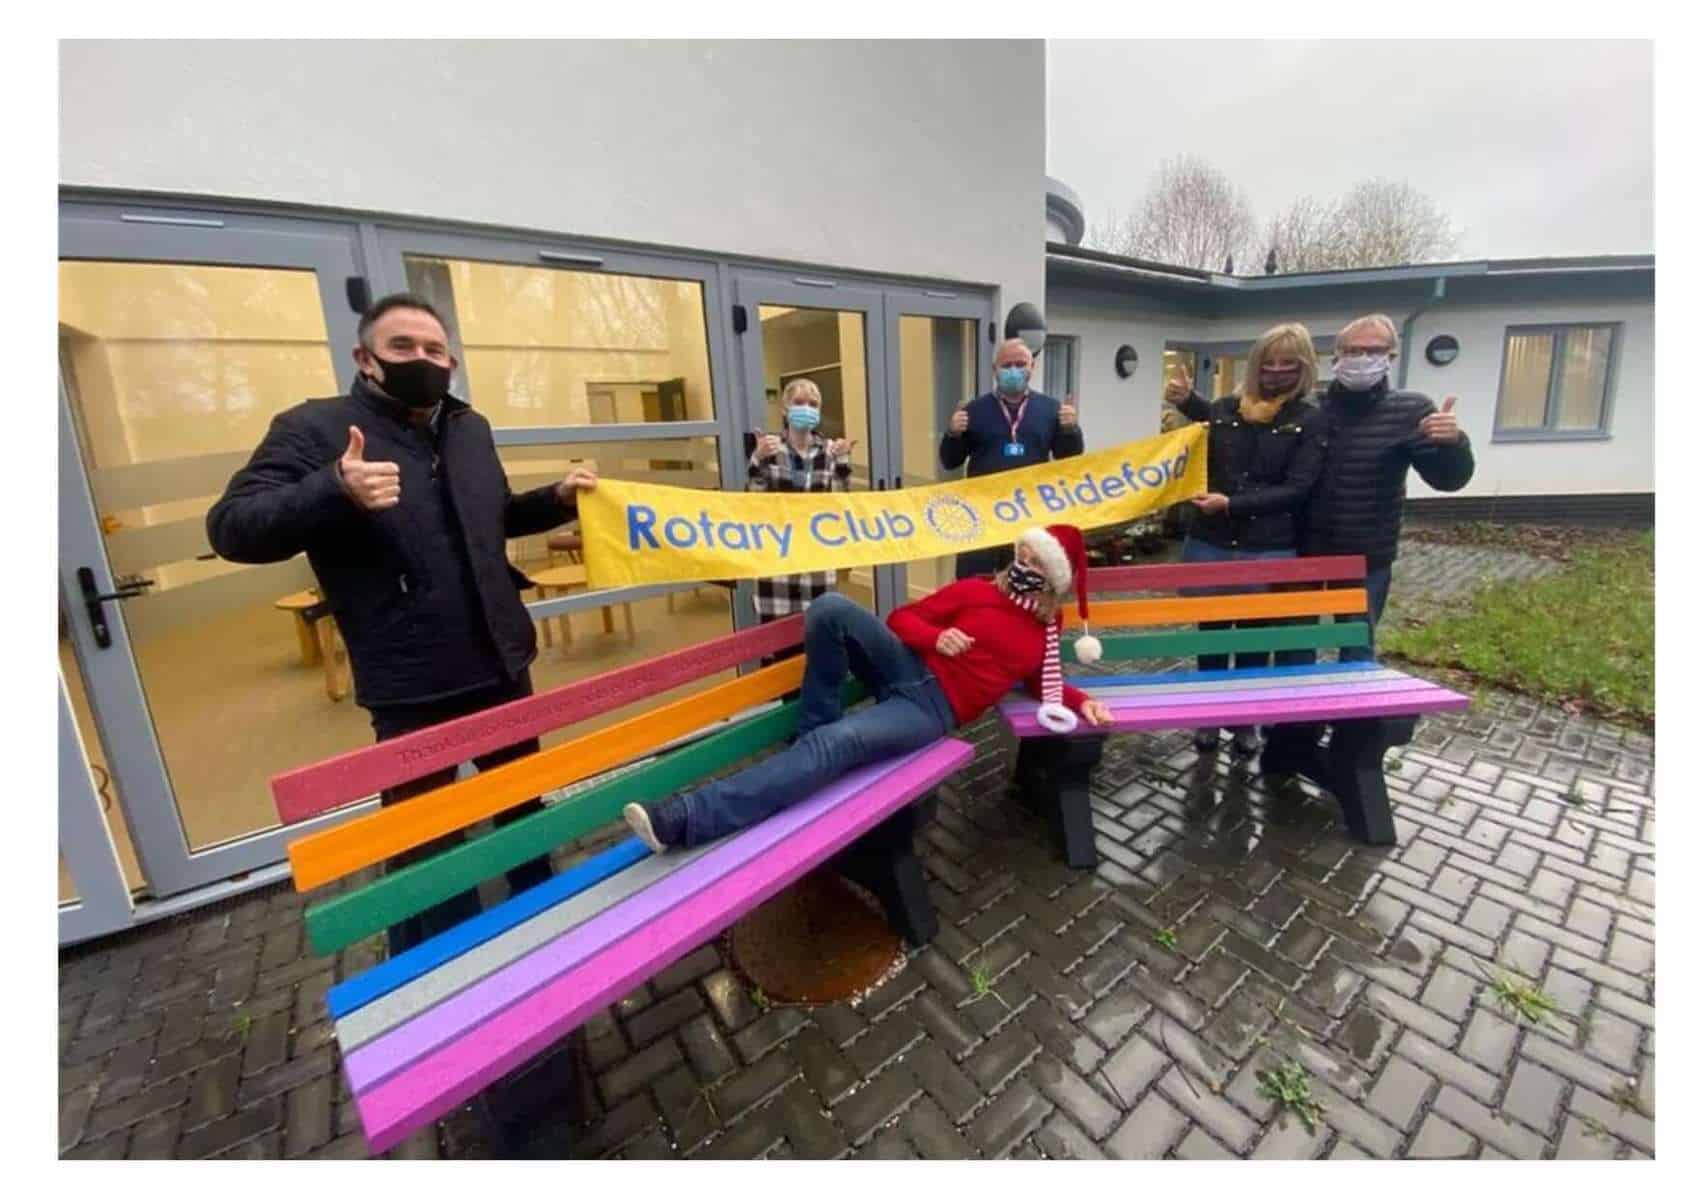 Coloured Peaks benches Bideford Rotary Club